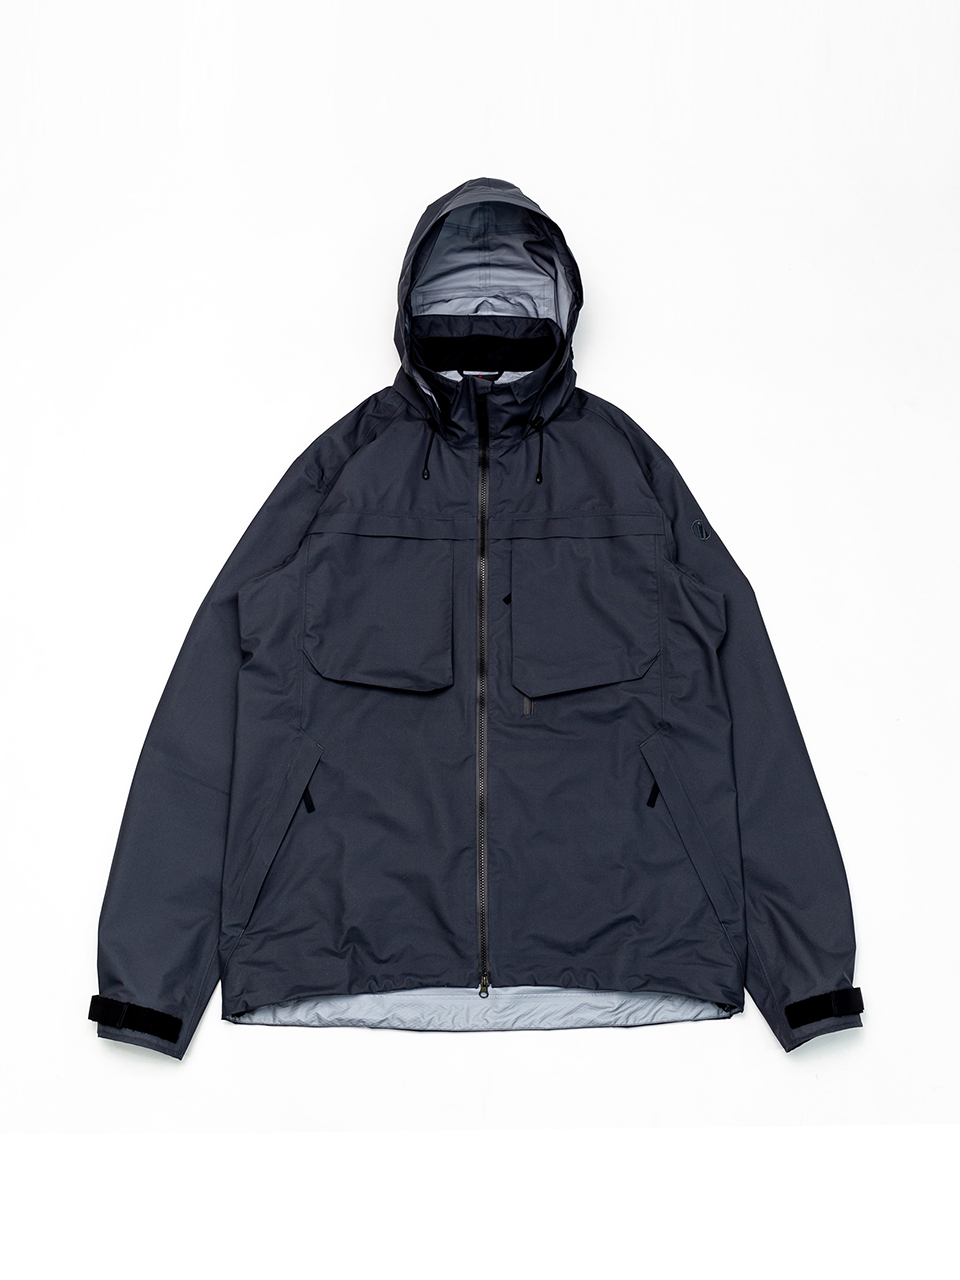 POUTNIK CAW Jacket GORE-TEX®【カウ ジャケット】 The Urban Traveler 